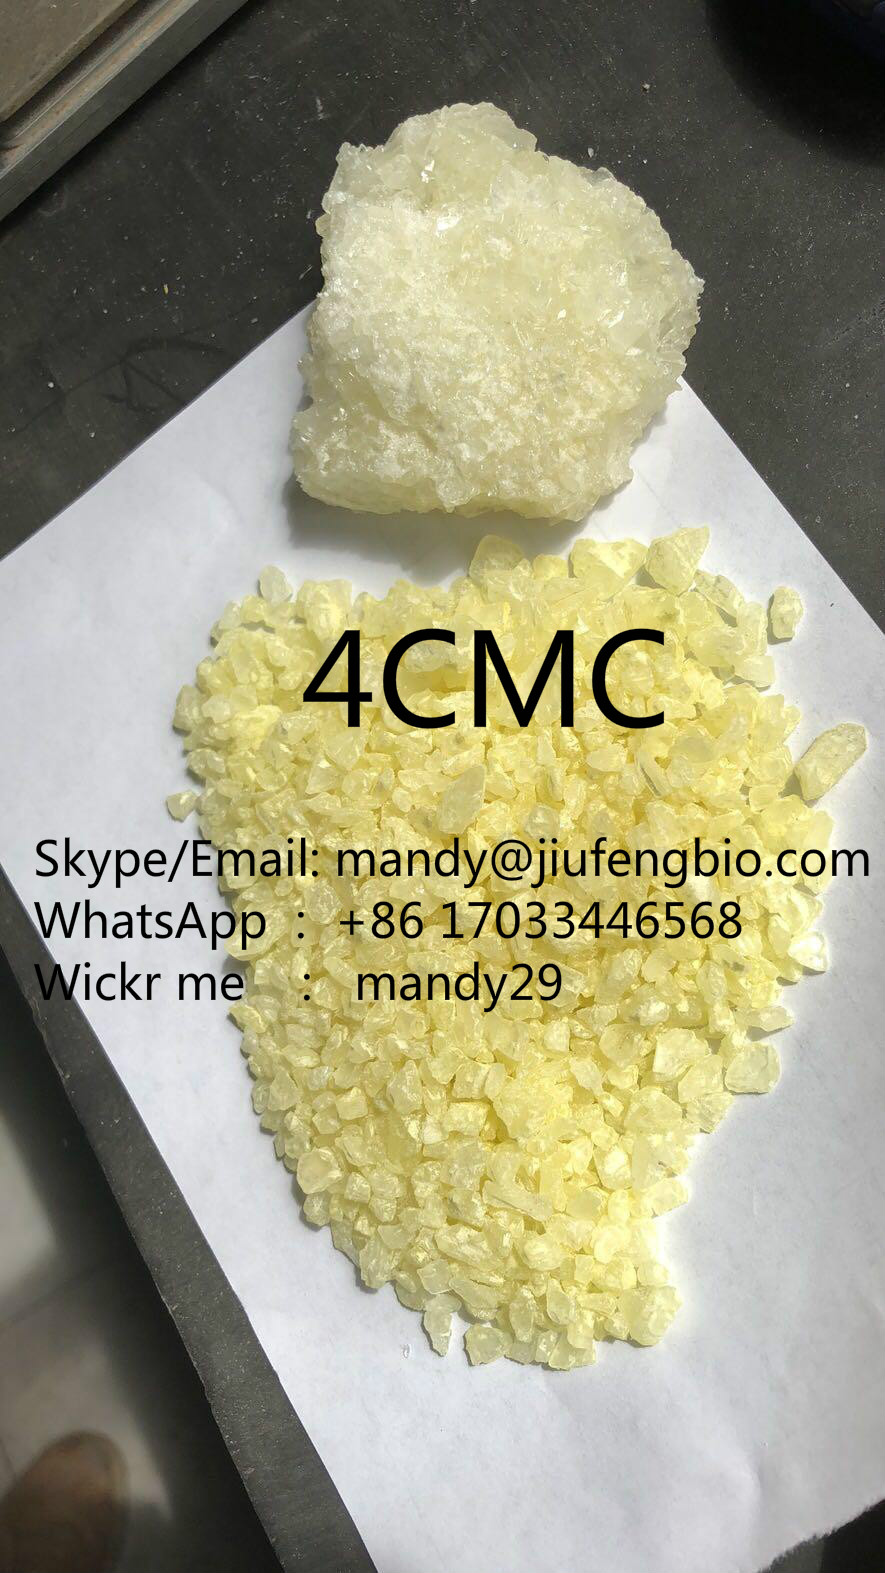 Buy MDMA,BK-EBDP, APVP, 4CMC, 4-MAR, METHYLONE, PENTEDRONE, METHAMPHETAMINE.WhatsAapp : +8